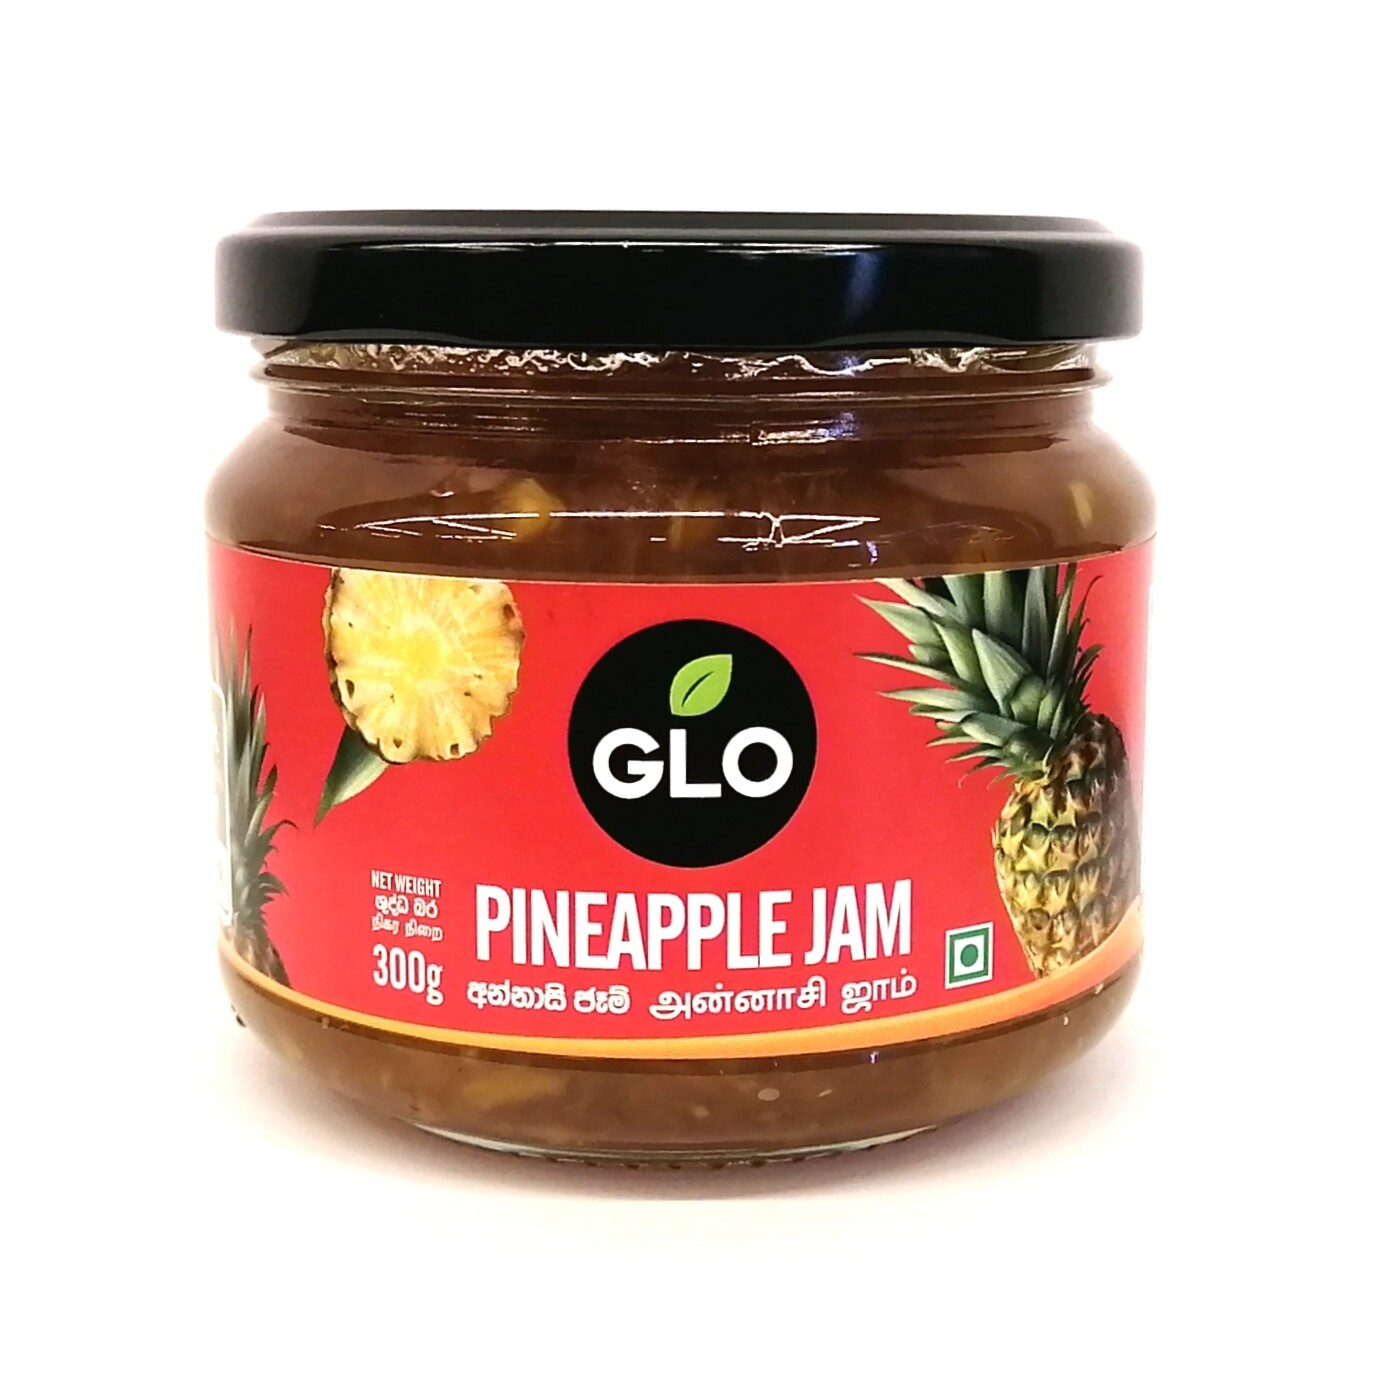 GLO Pineapple Jam